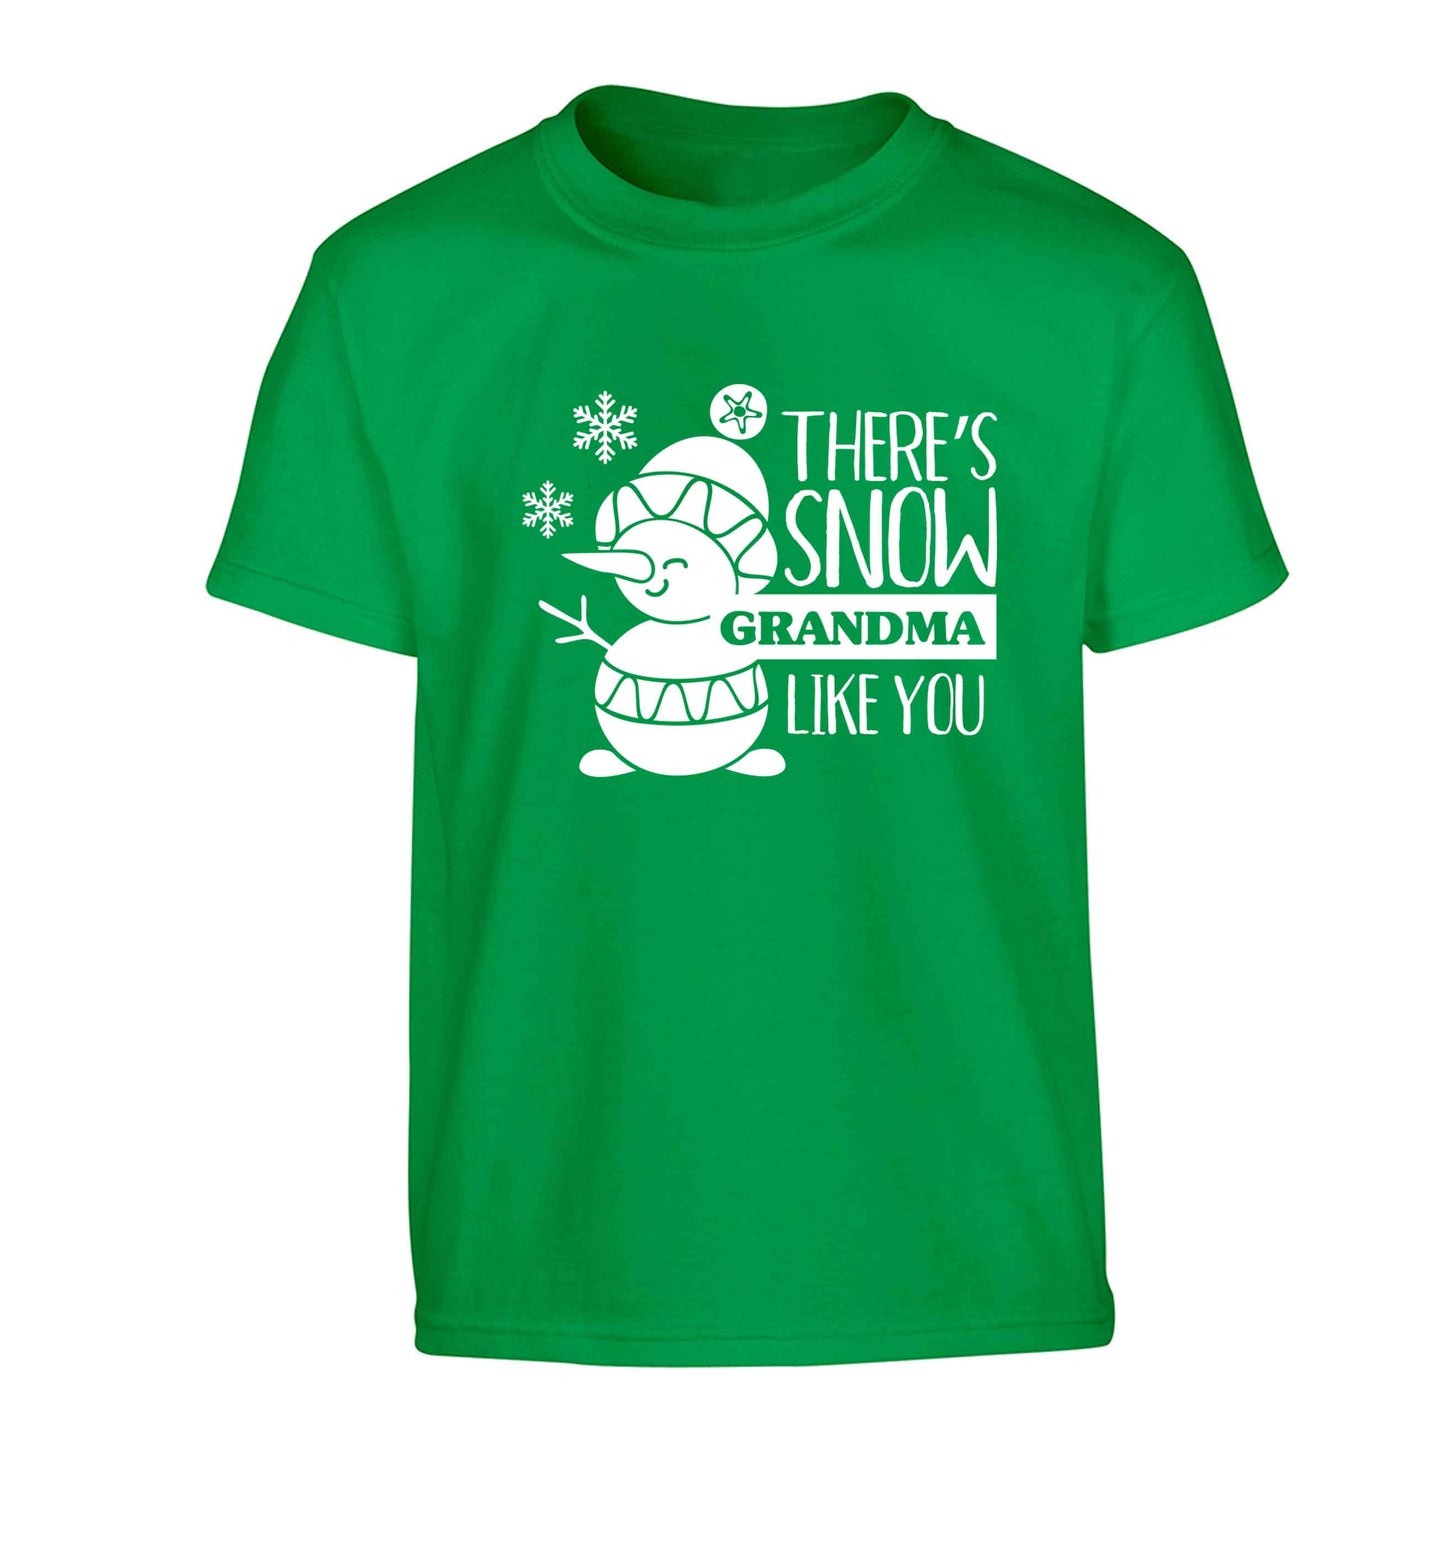 There's snow grandma like you Children's green Tshirt 12-13 Years